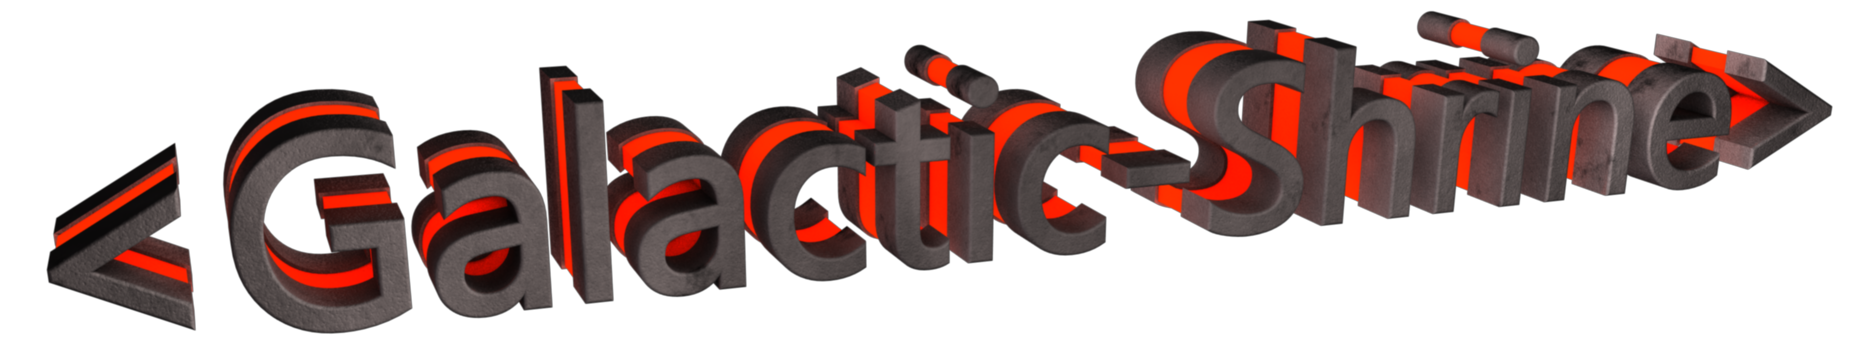 Galactic-Shrine logo